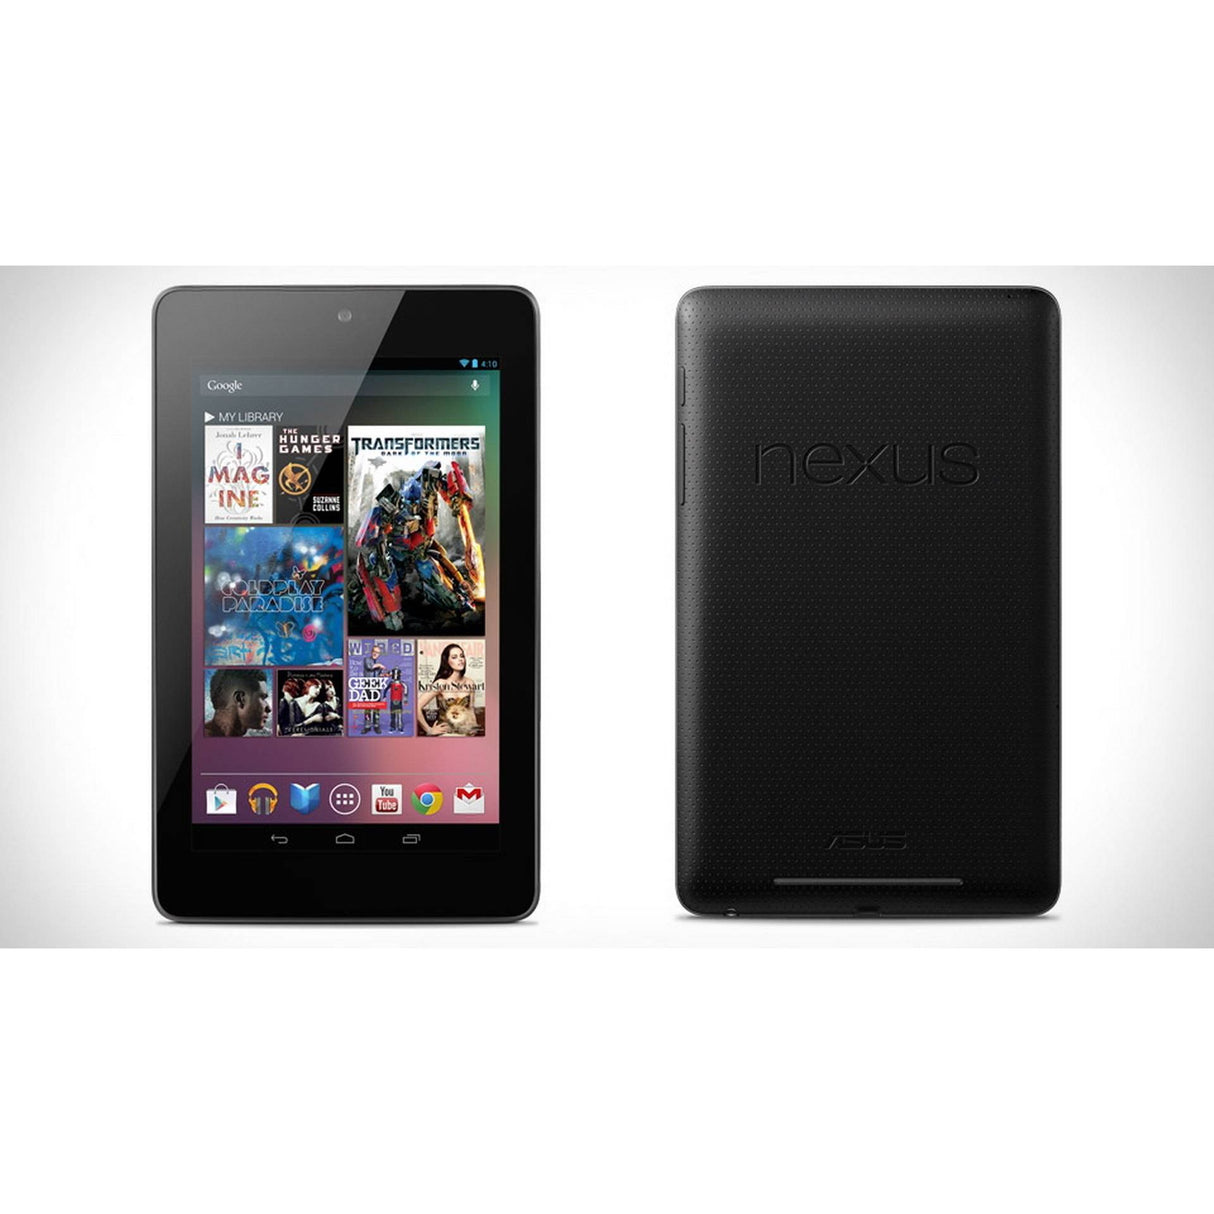 ASUS Google Nexus 7 7" 16 GB Android 4.1 JellyBean Wi-Fi Tablet